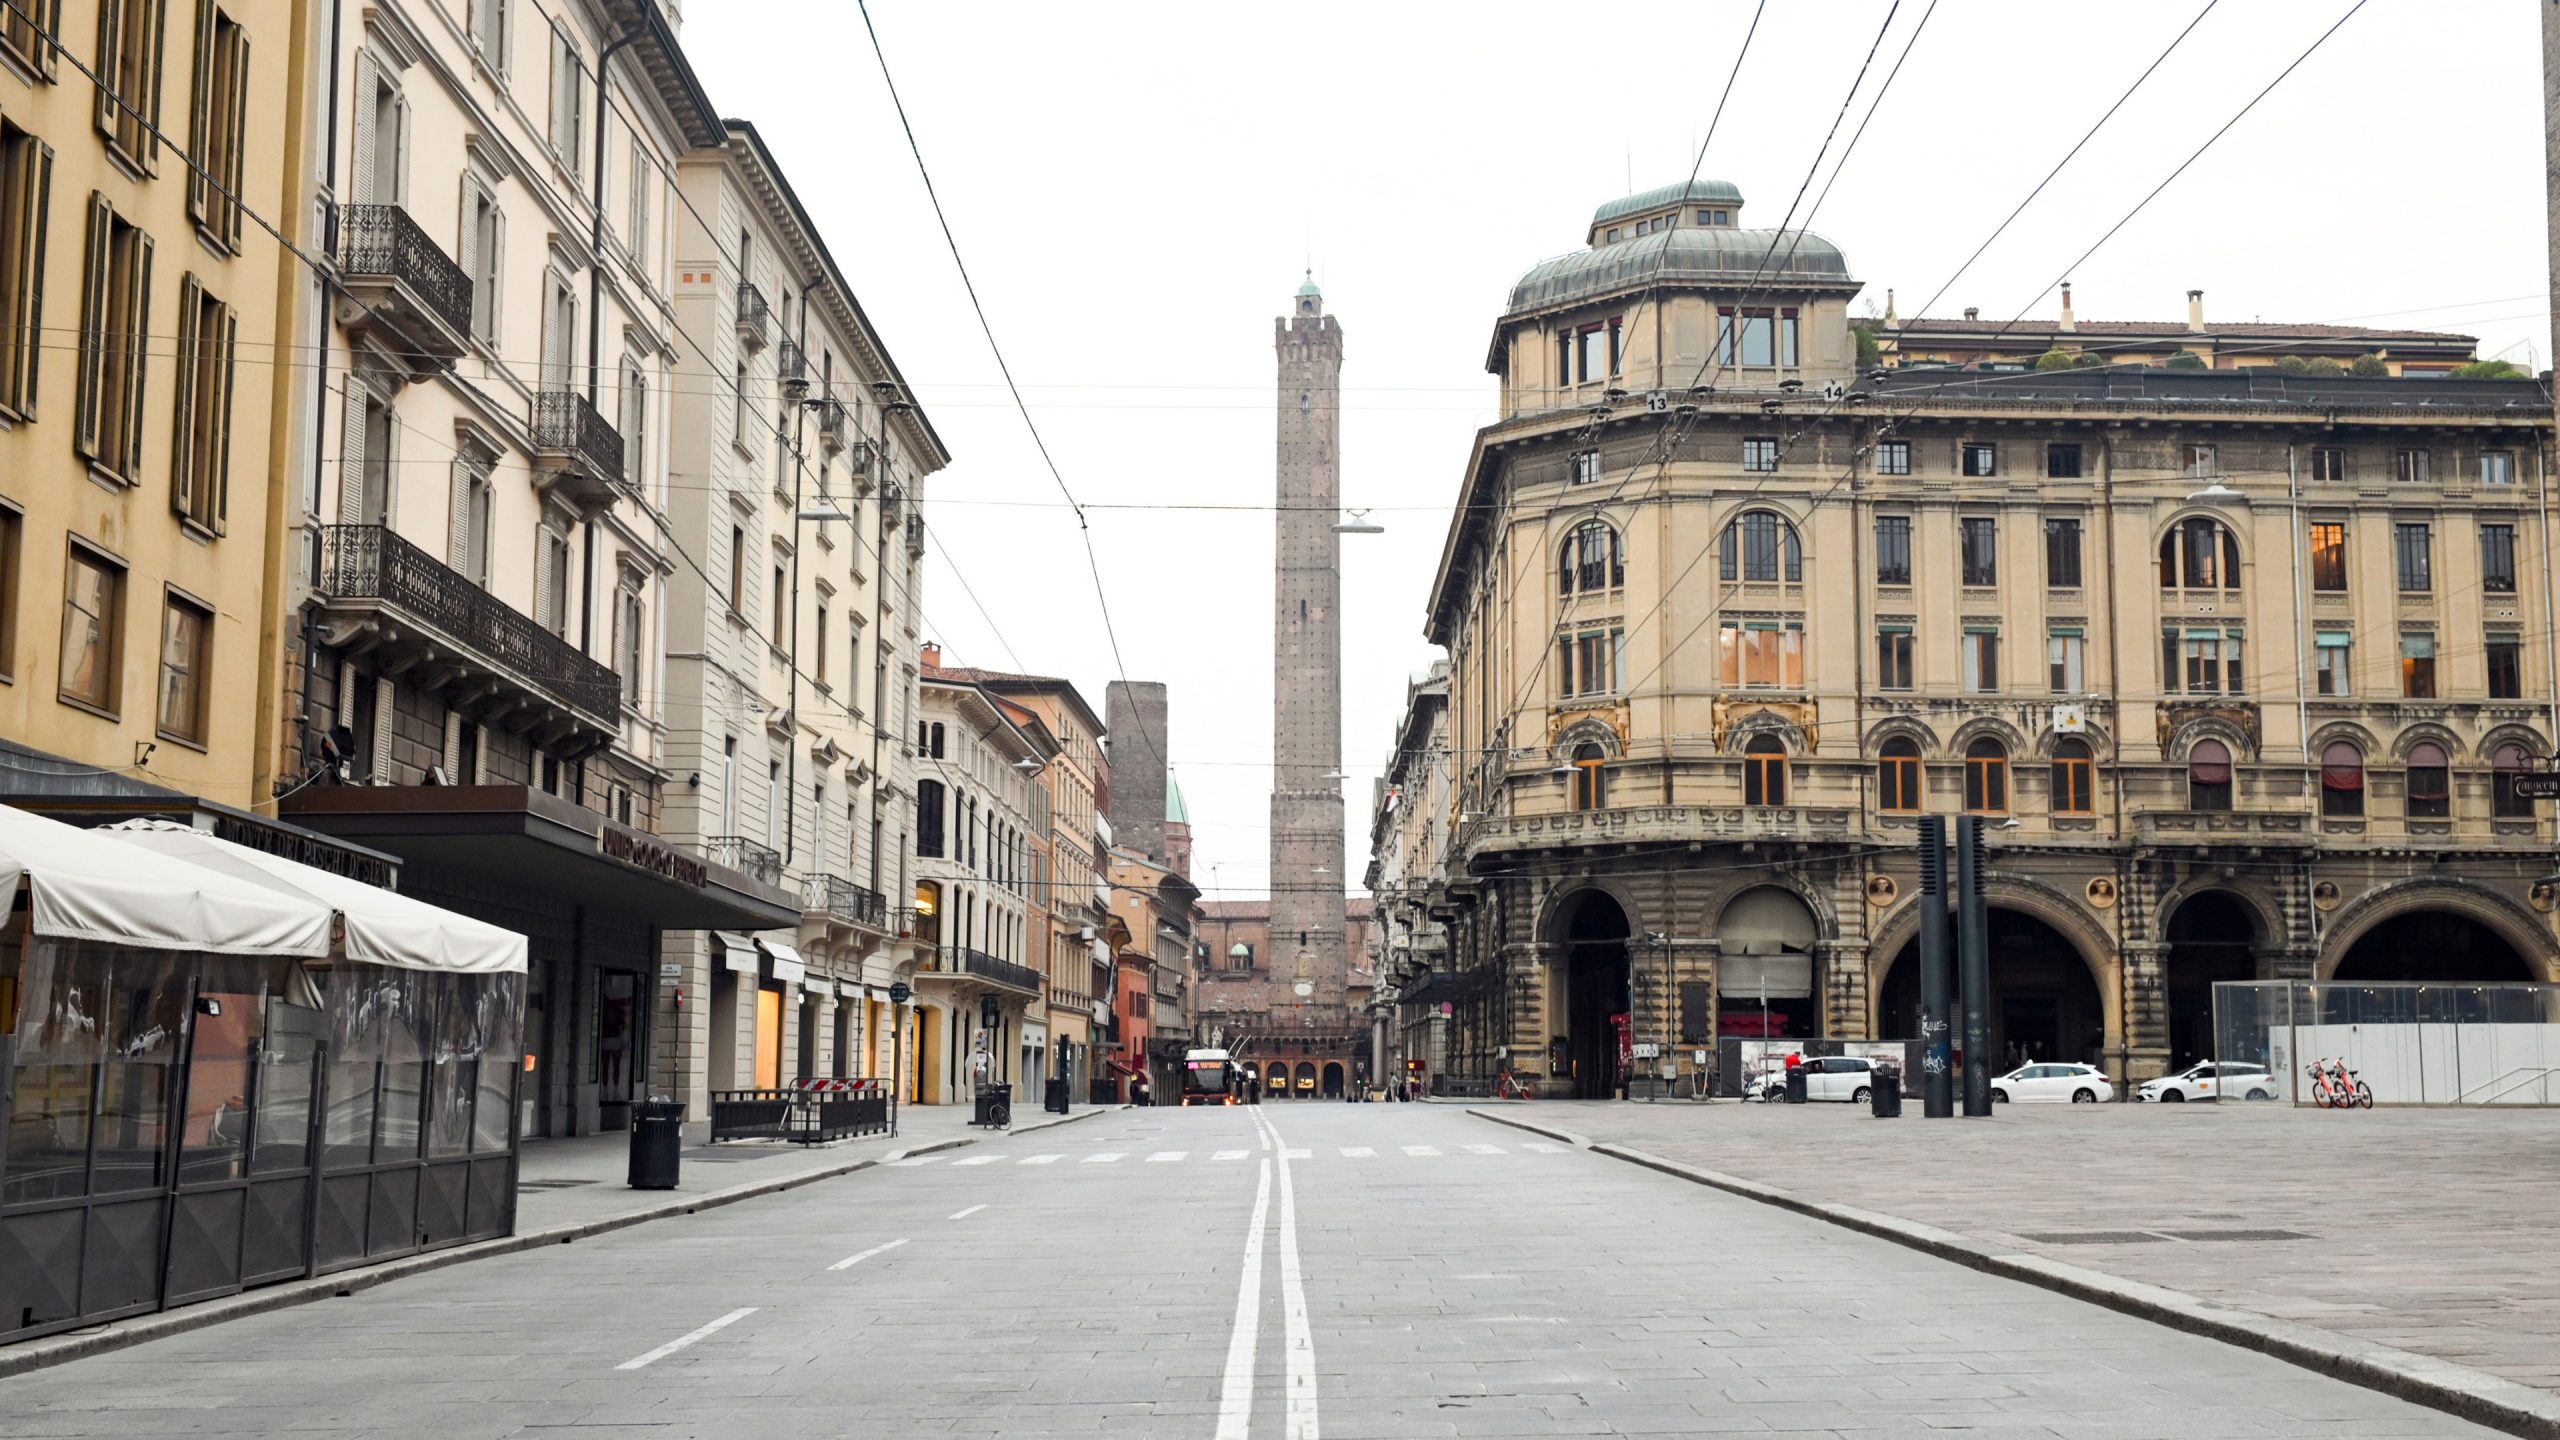 Lakši zemljotres osetio se u Rimu, za sada bez vesti o šteti 1